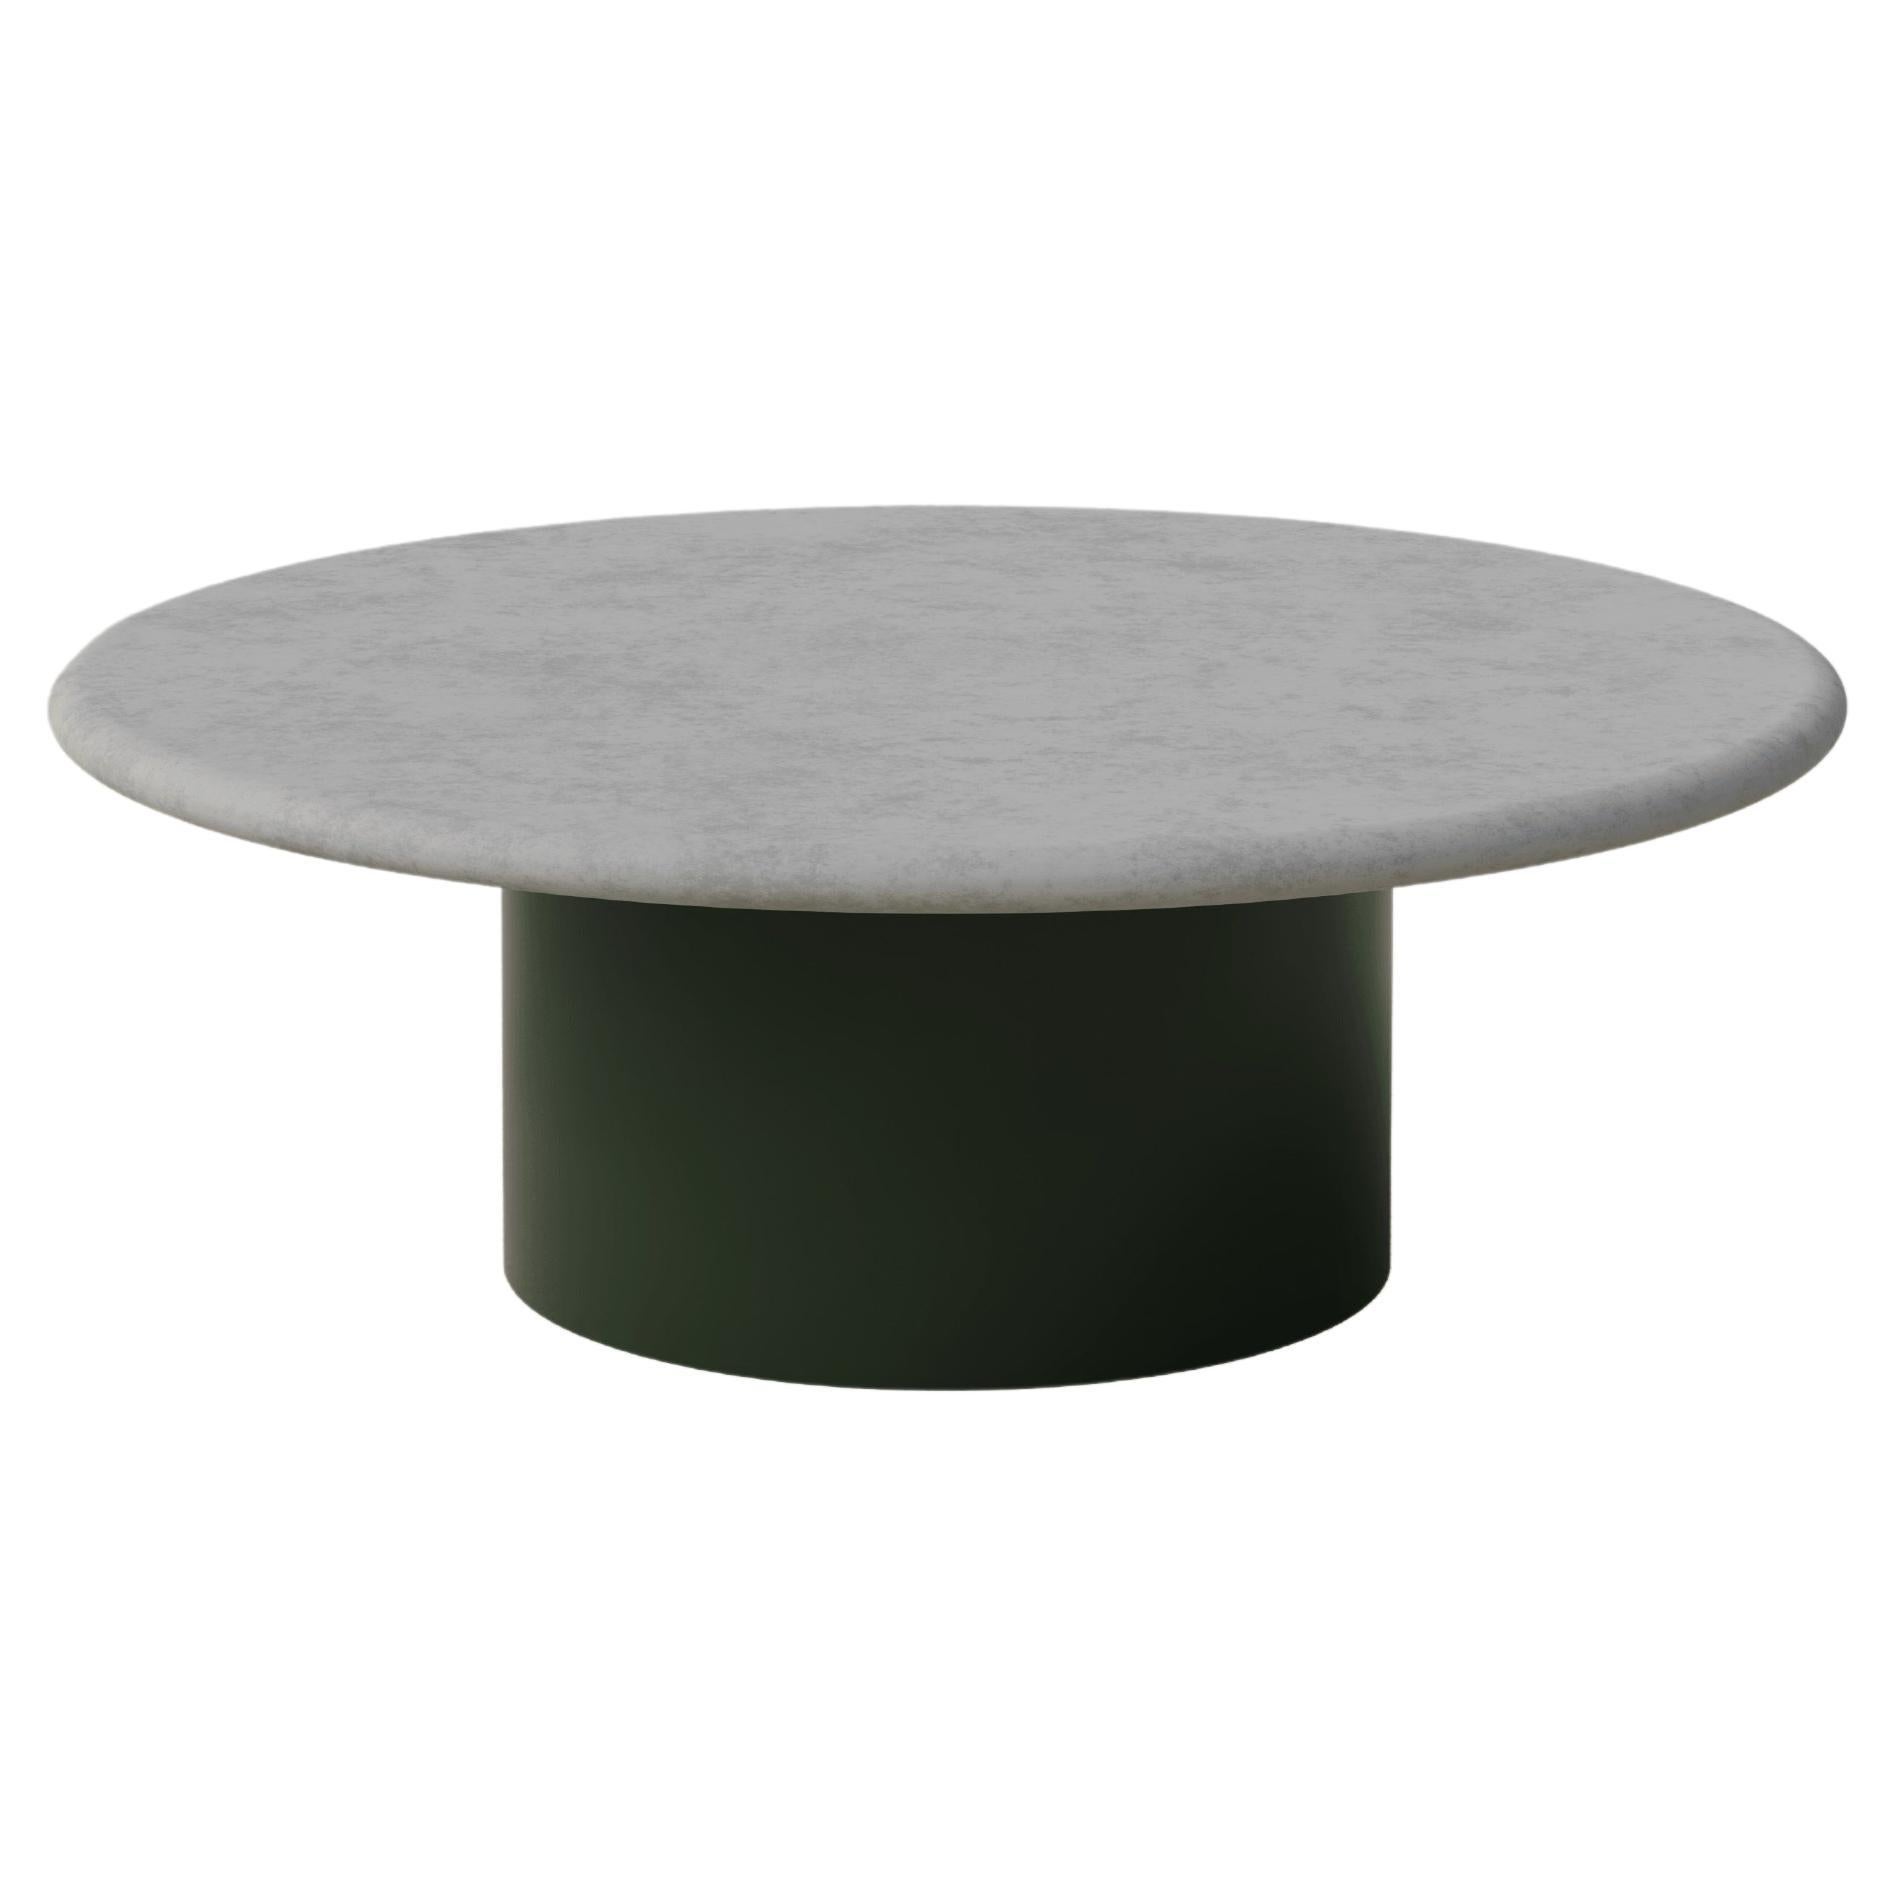 Raindrop Coffee Table, 800, Microcrete / Moss Green For Sale